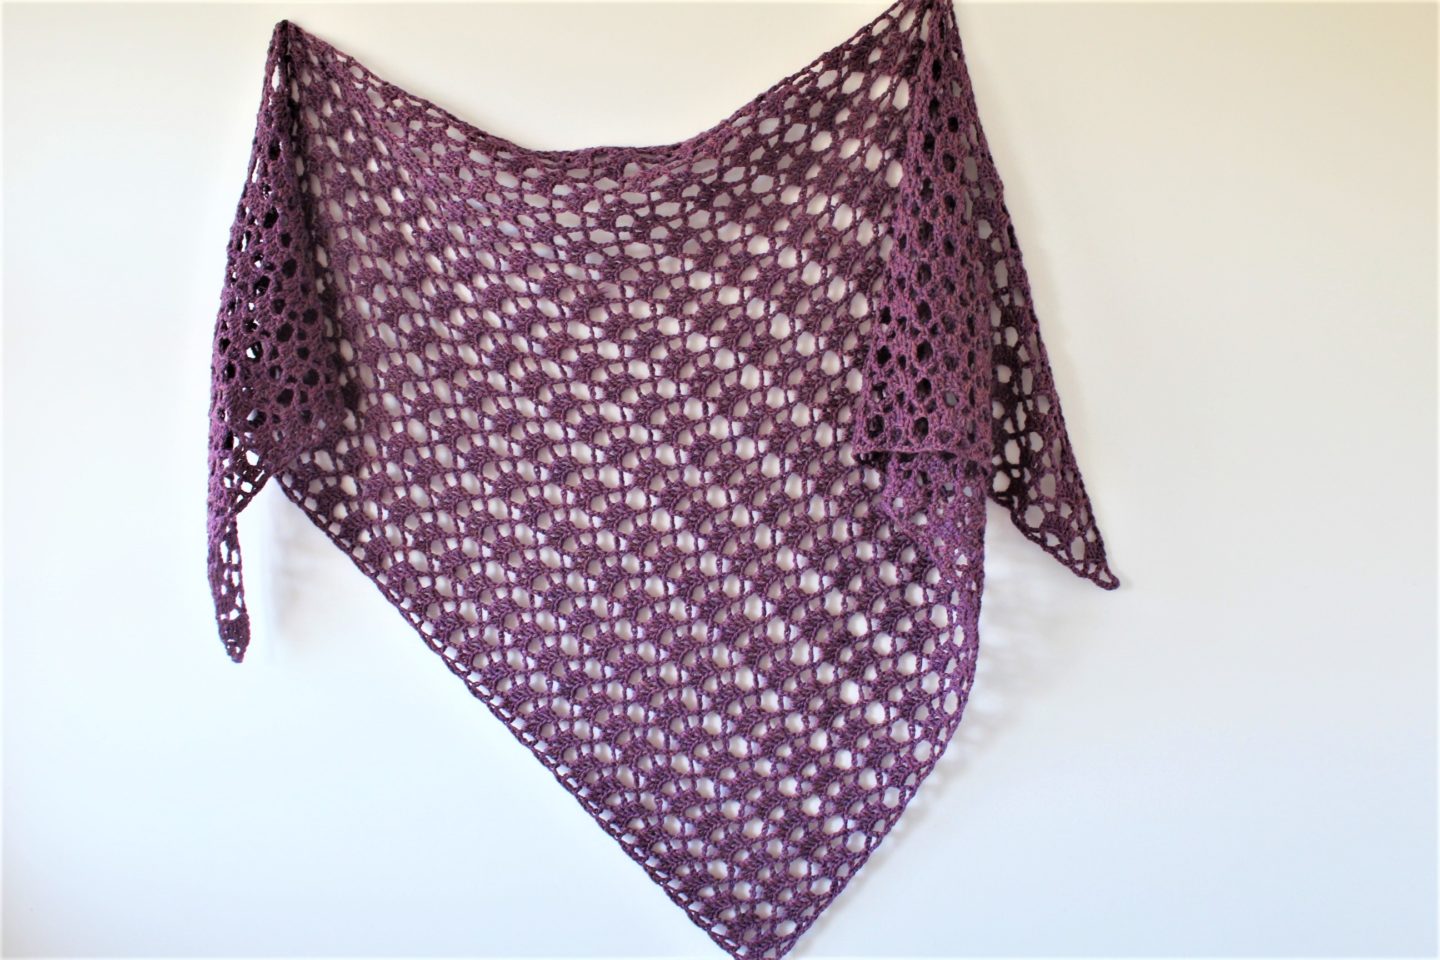 Free Crochet Shawl Pattern with an asymmetric design